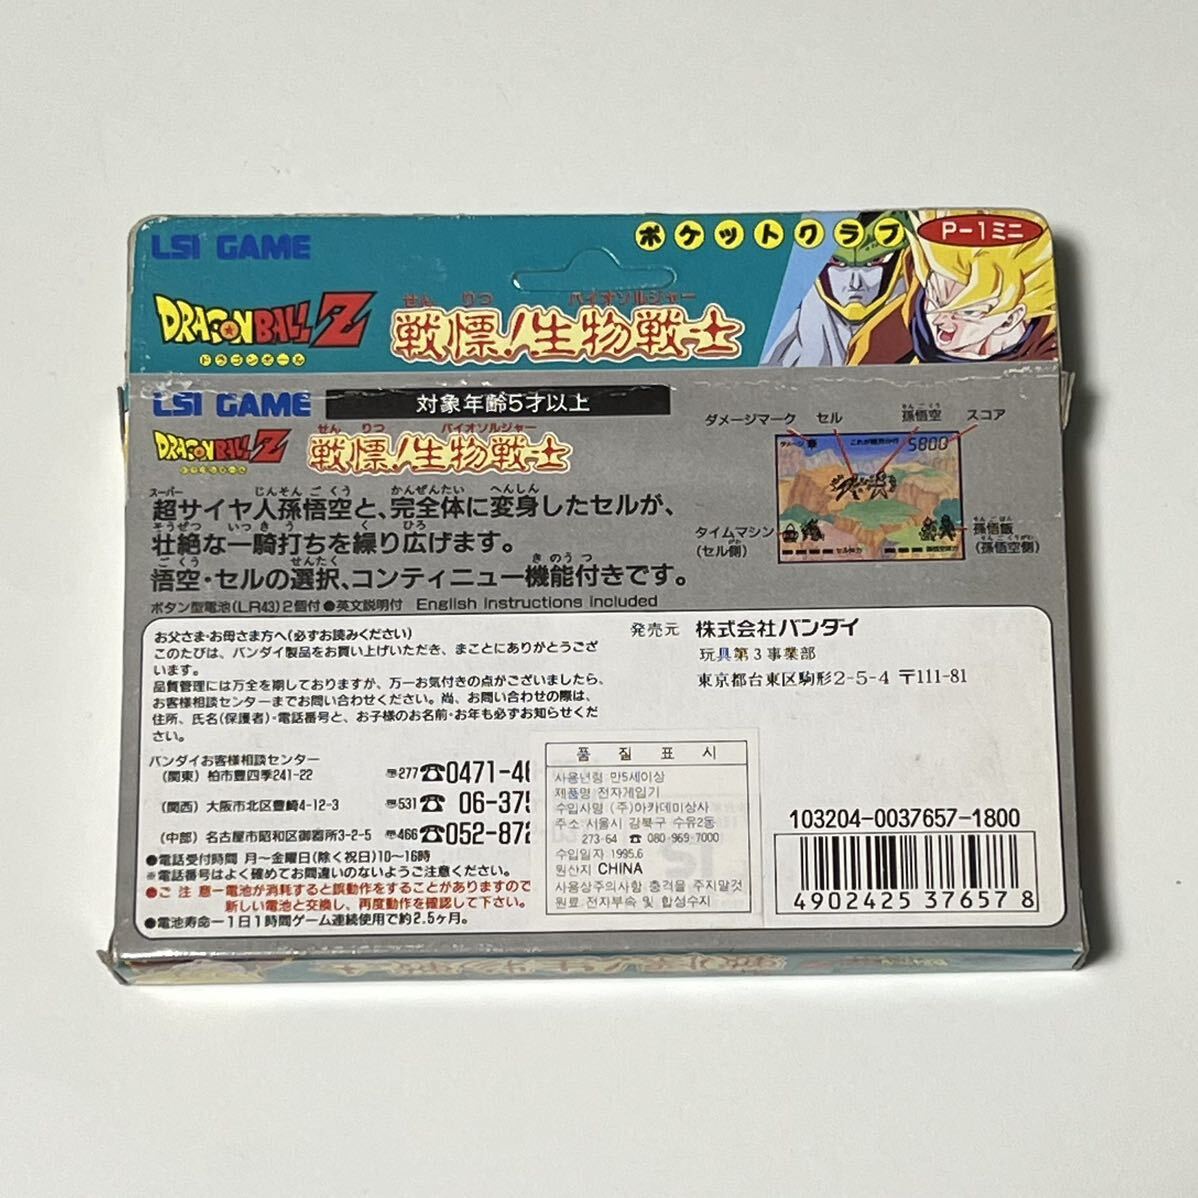 Y1~ Korea Ryuutsu version regular goods unused Bandai pocket Club P-1 Mini LSI game Dragon Ball Z war .! living thing warrior Game & Watch 